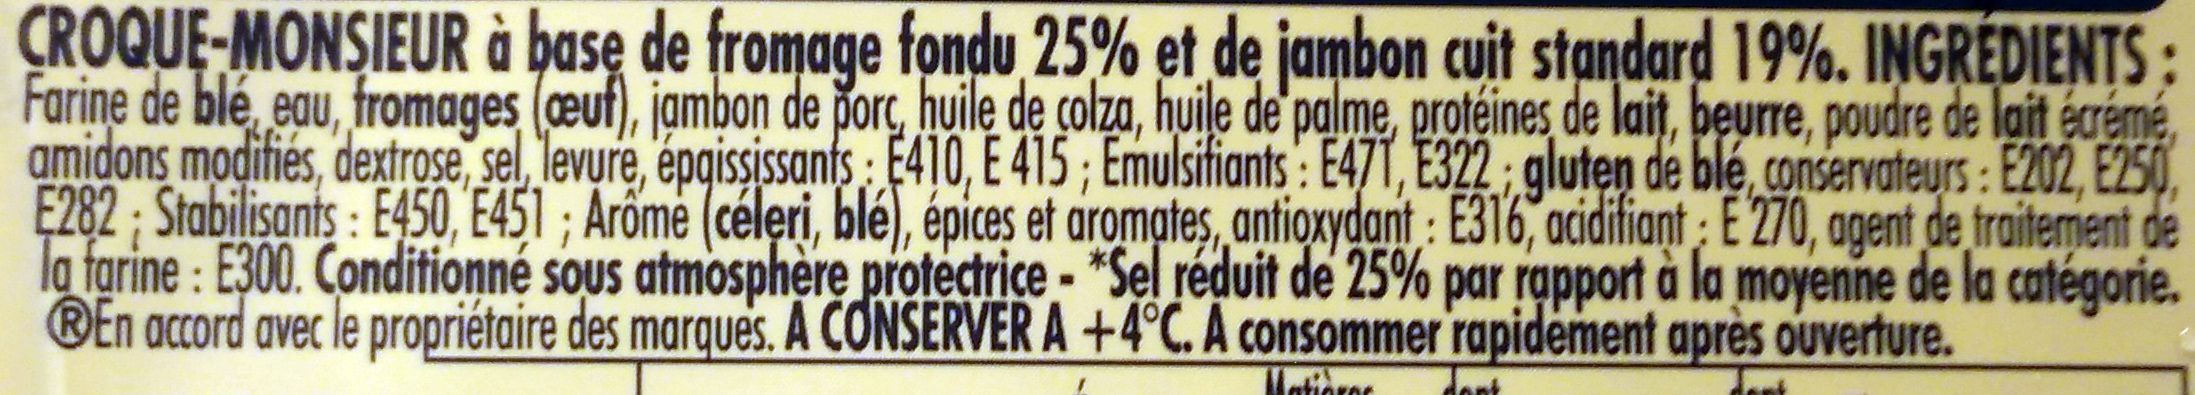 Tendre Croc' L'Original Jambon Fromage -25% de Sel - Ingredients - fr